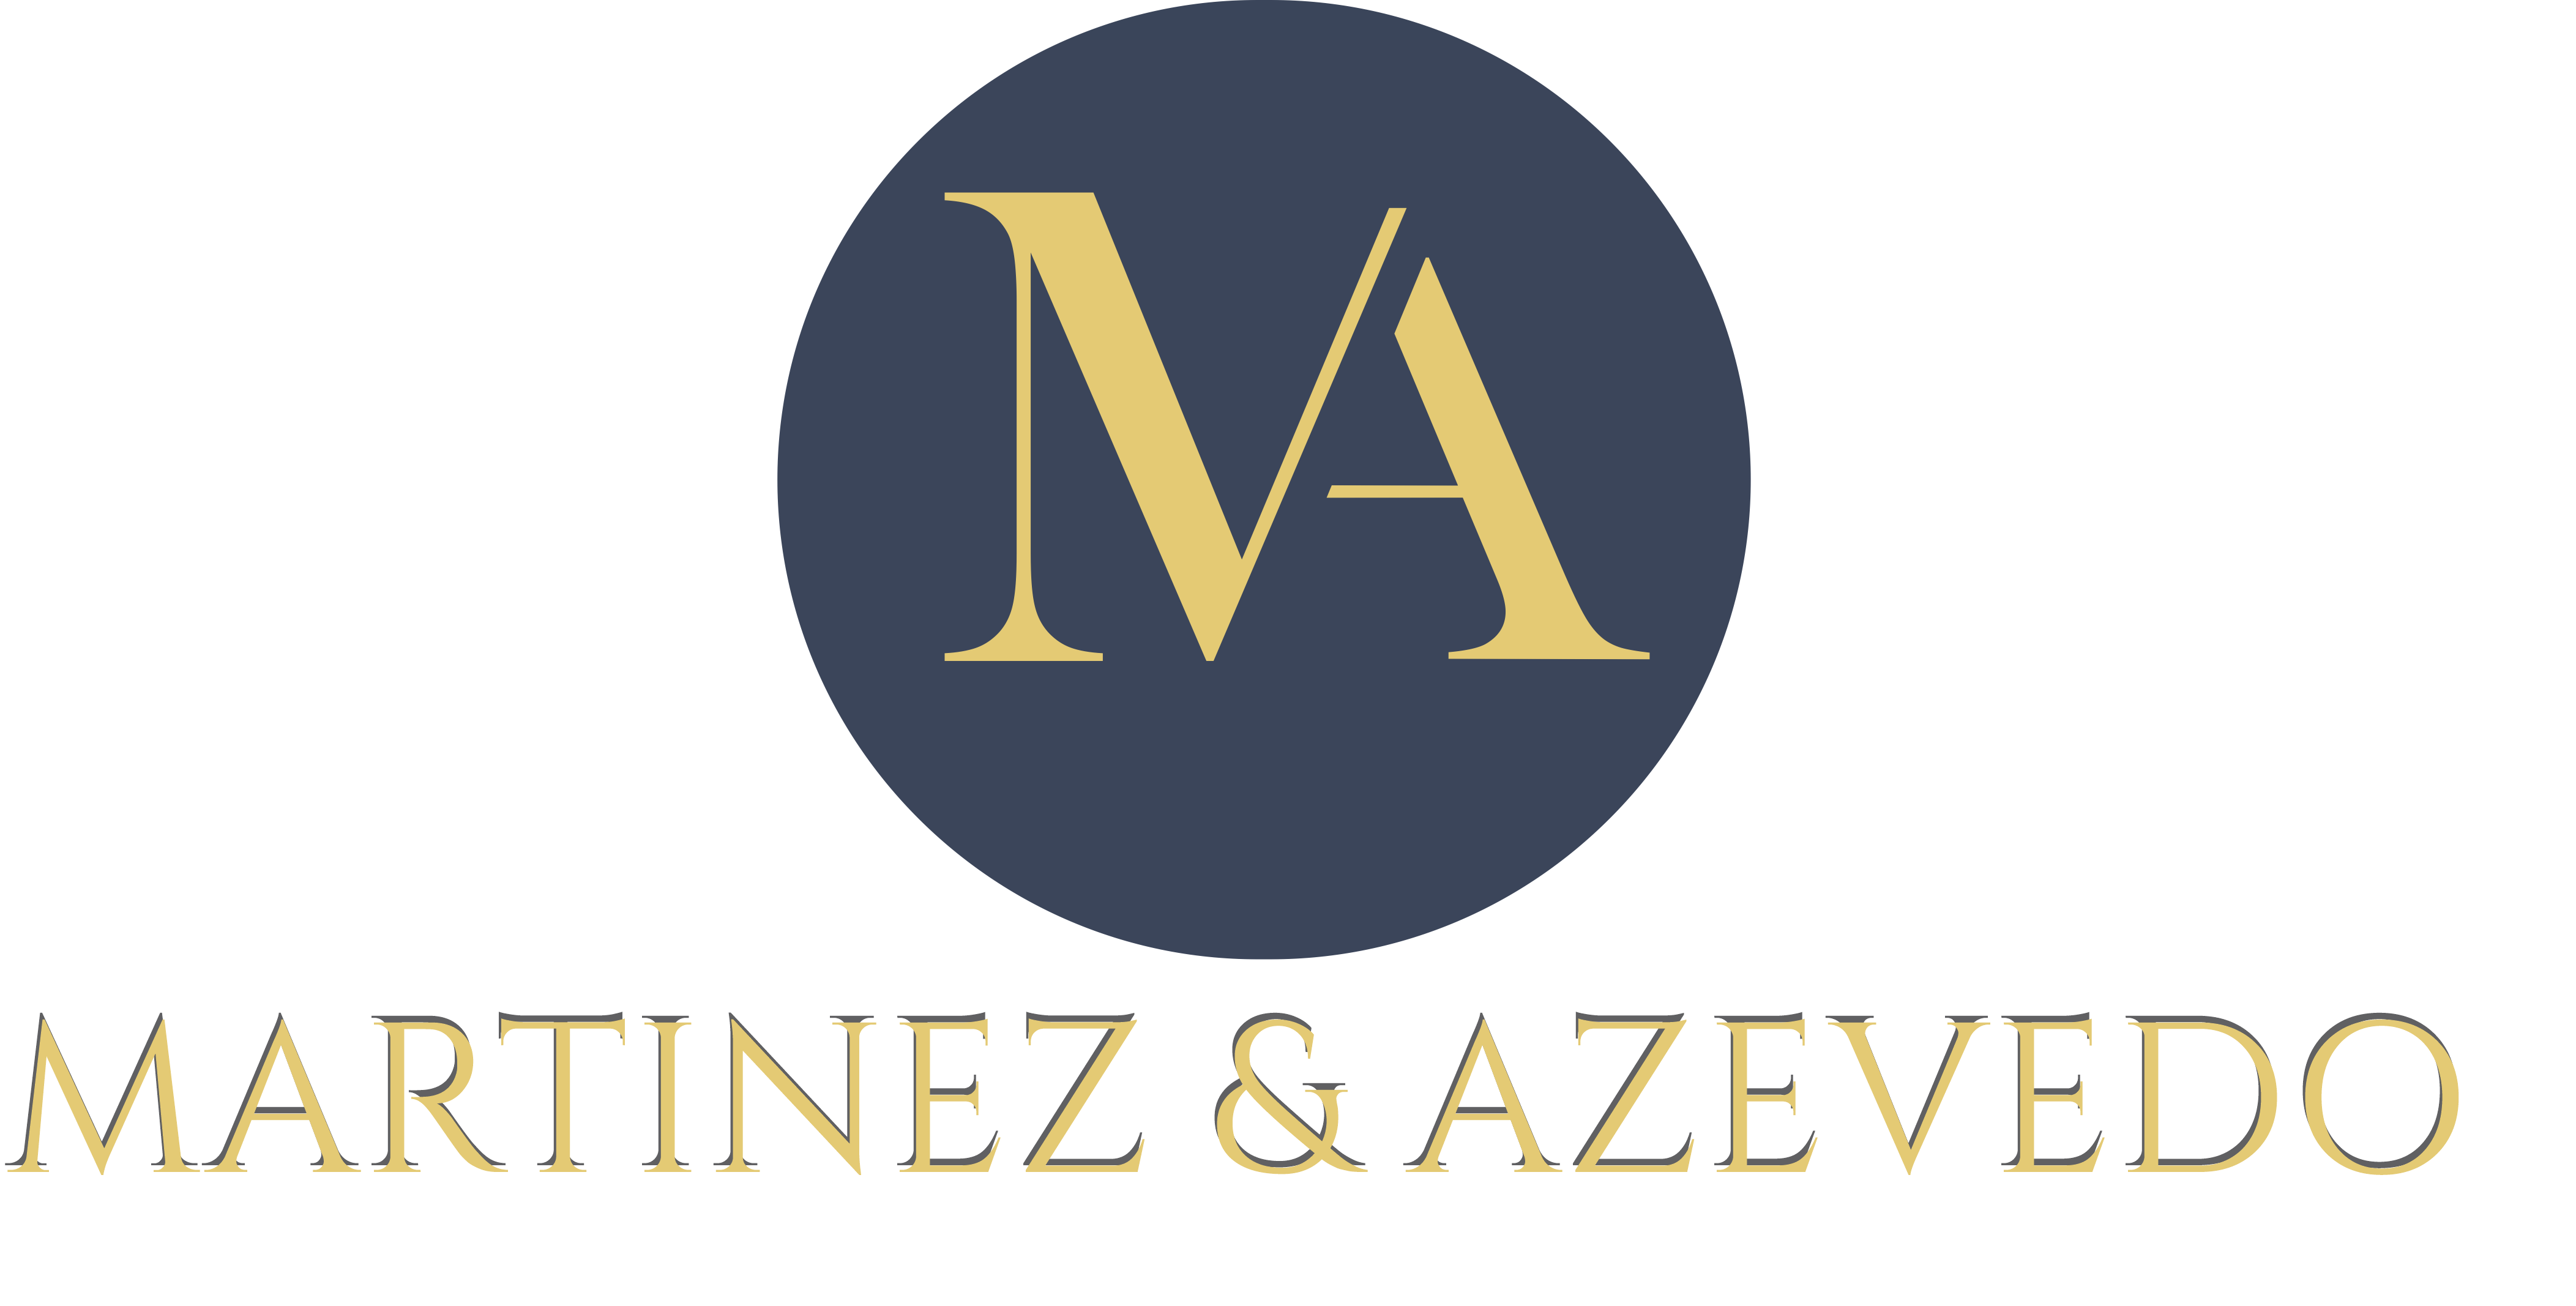 Martinez & Azevedo